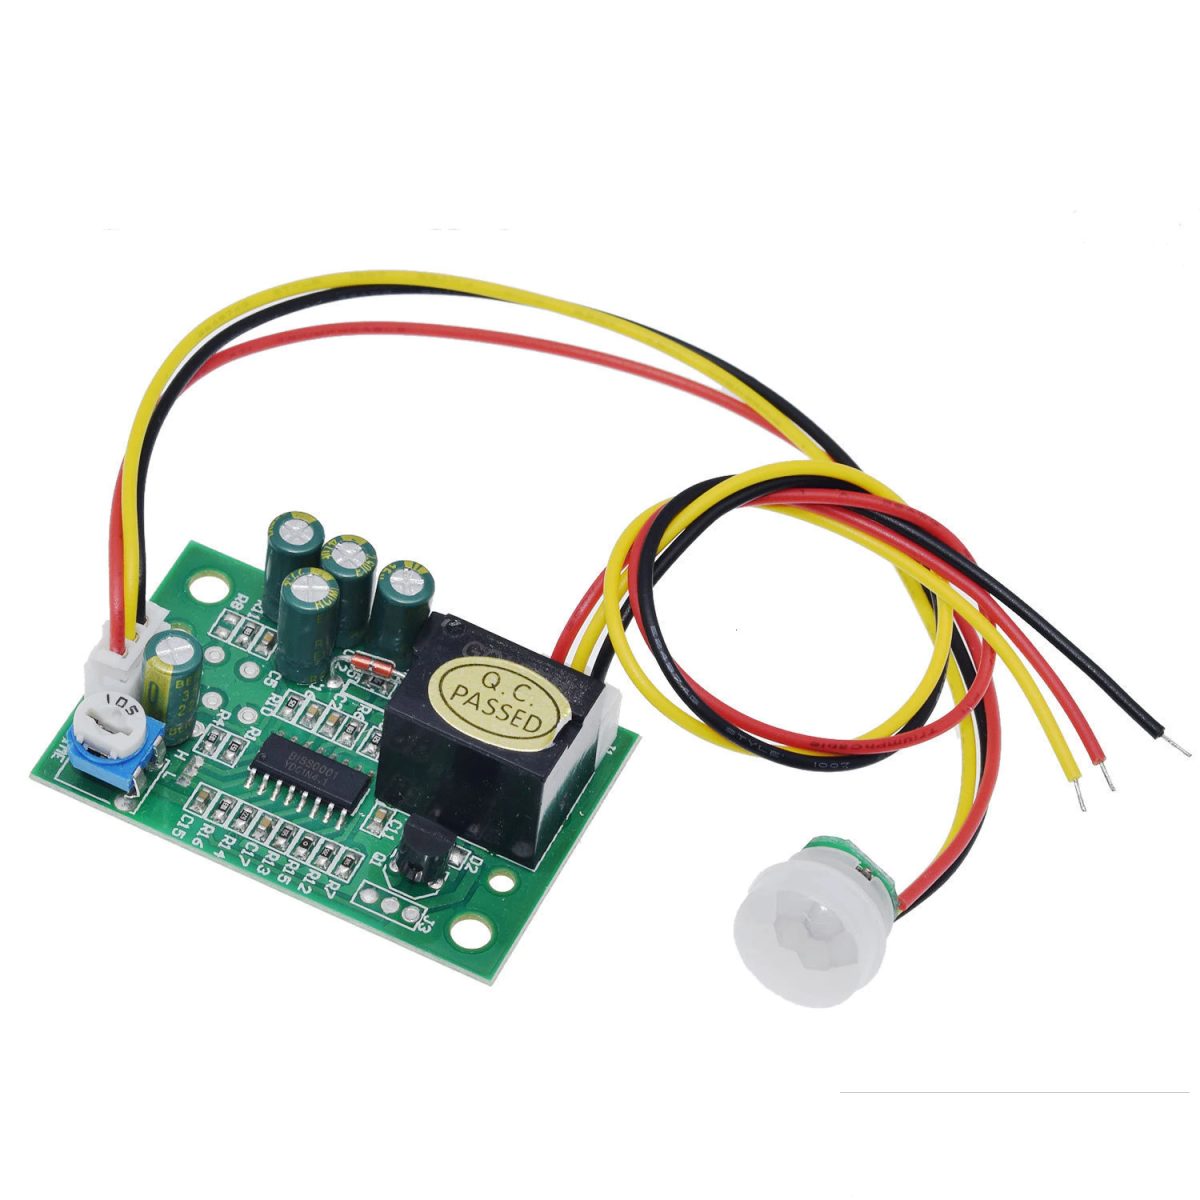 Sensor Interruptor Movimiento PIR 110-220V 3-6mt 100w - yorobotics